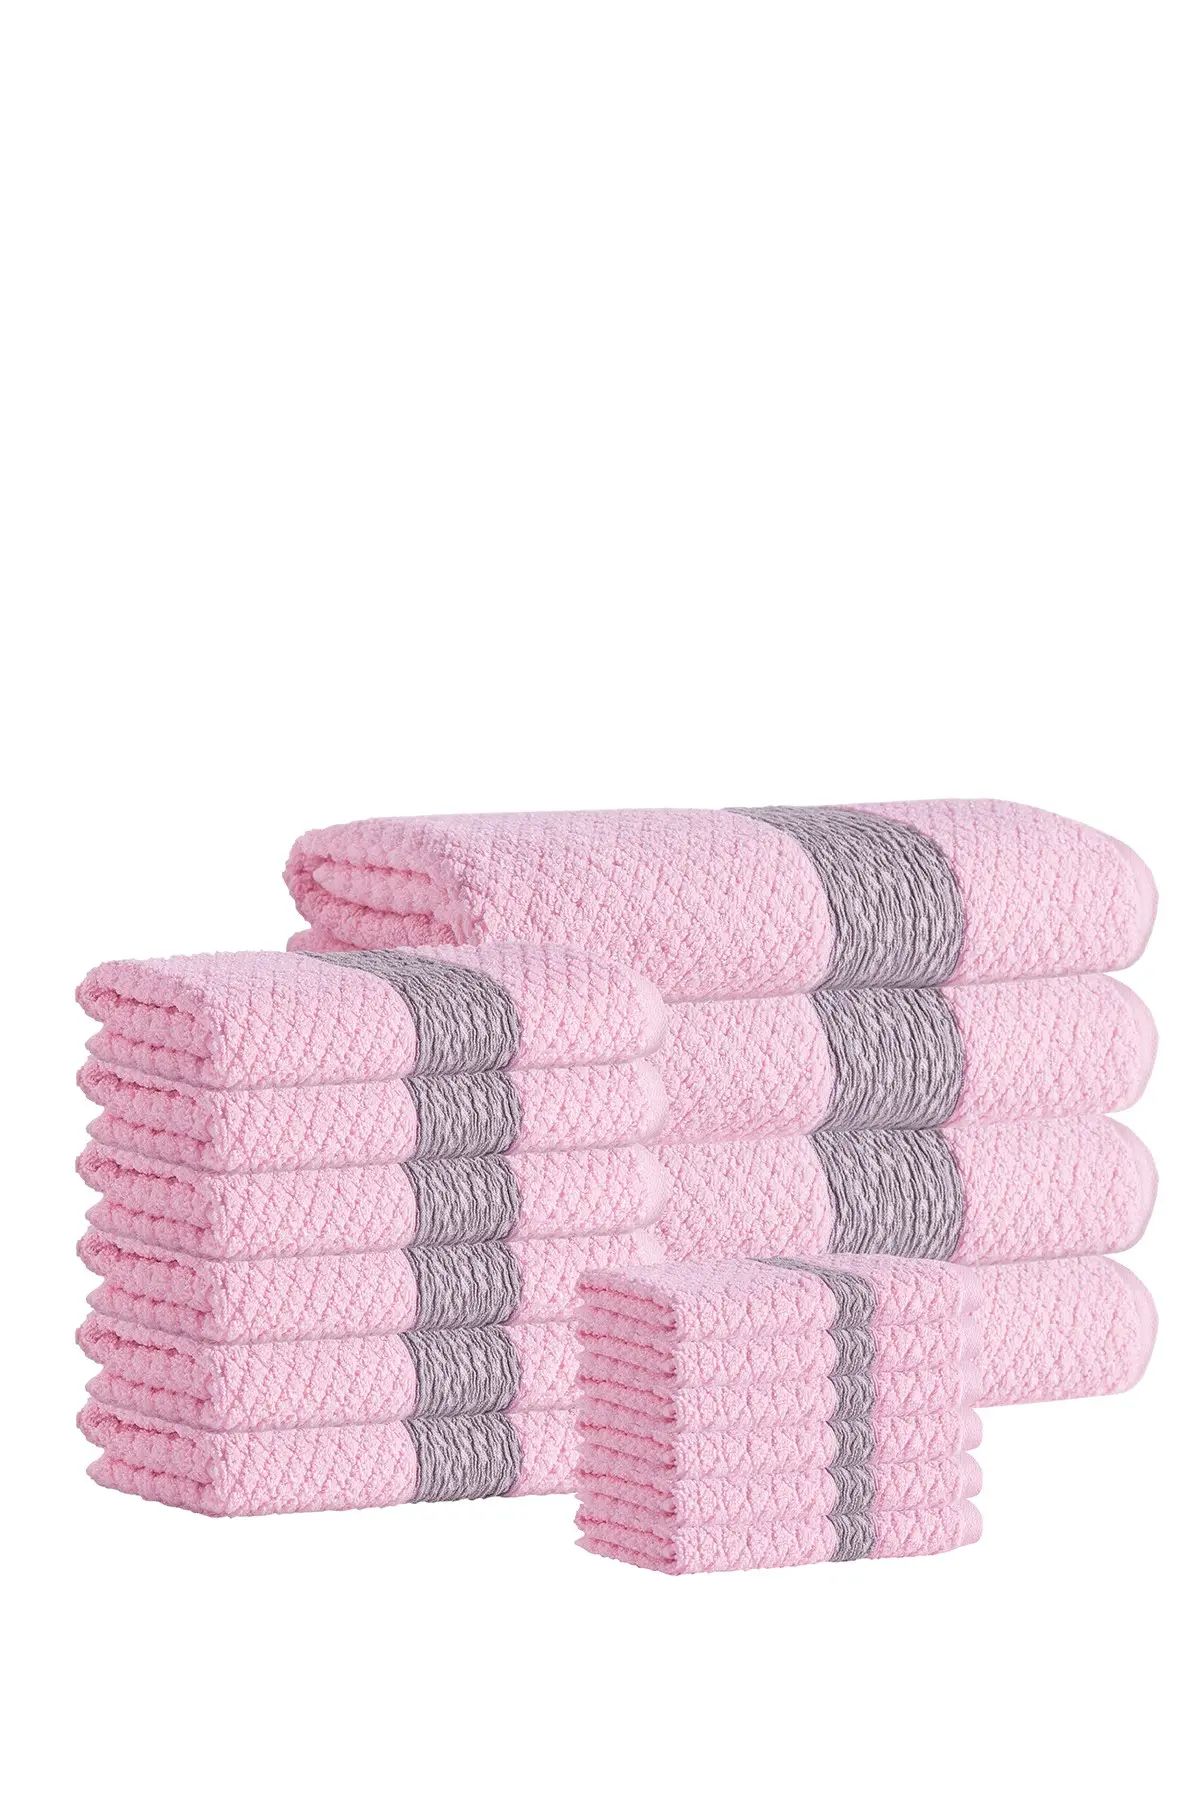 ENCHANTE HOME Anton Turkish Cotton 16-Piece Towel Set - Pink at Nordstrom Rack | Nordstrom Rack